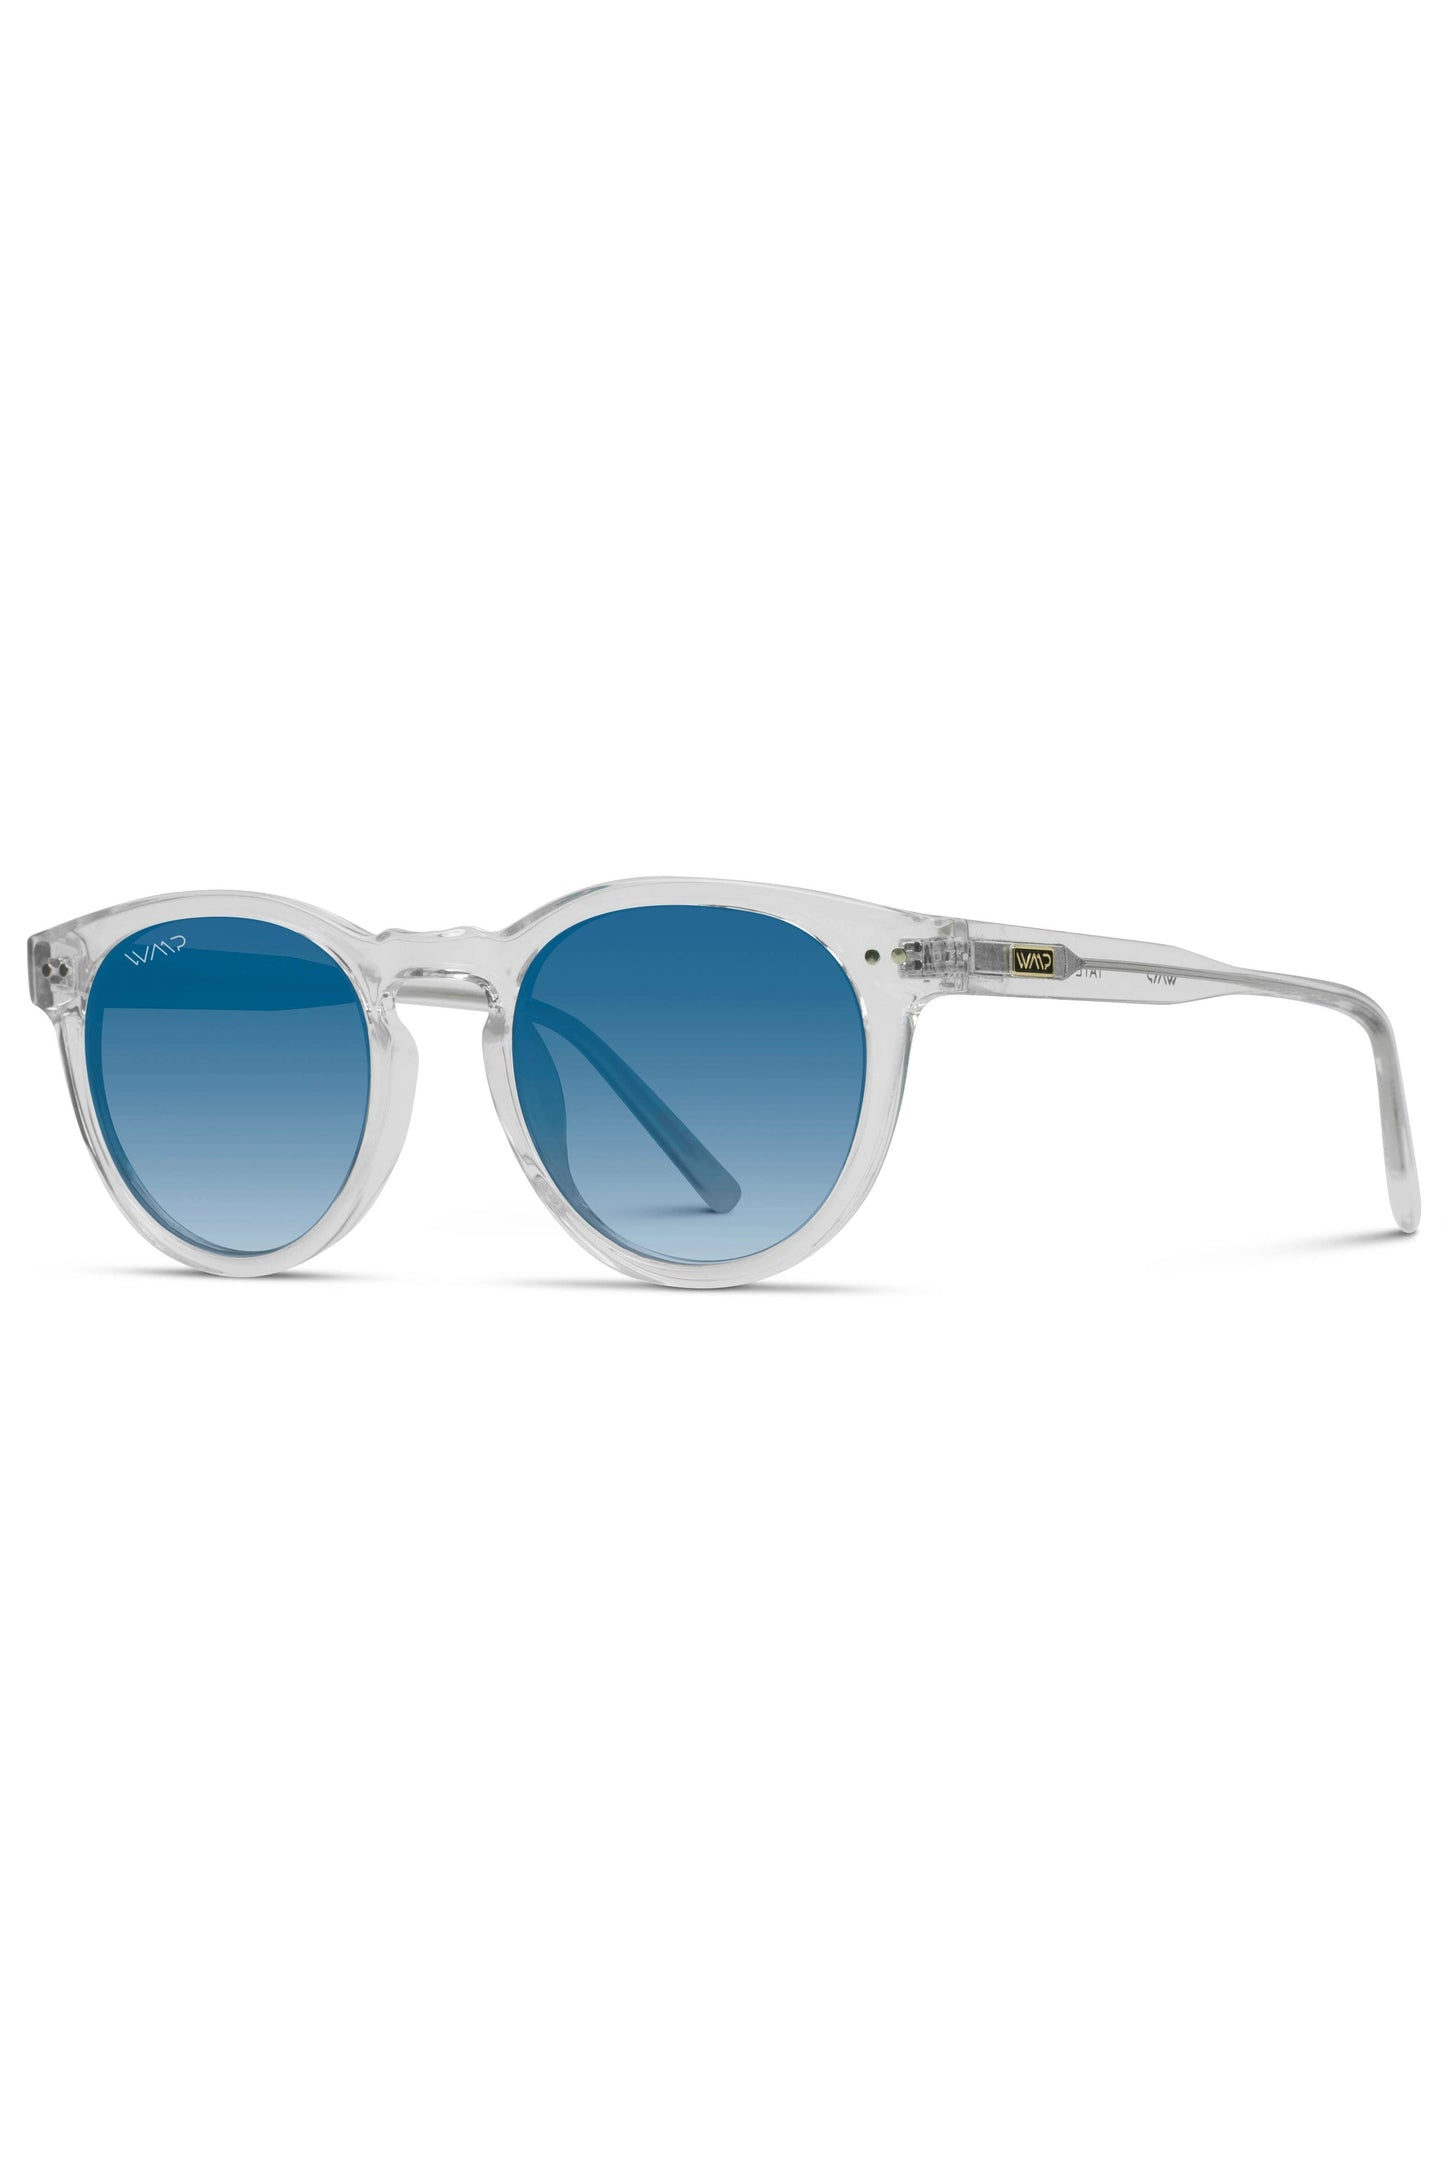 Classic Round Retro Acetate Polarized Sunglasses-Accessories-WMP Eyewear-Revive Boutique